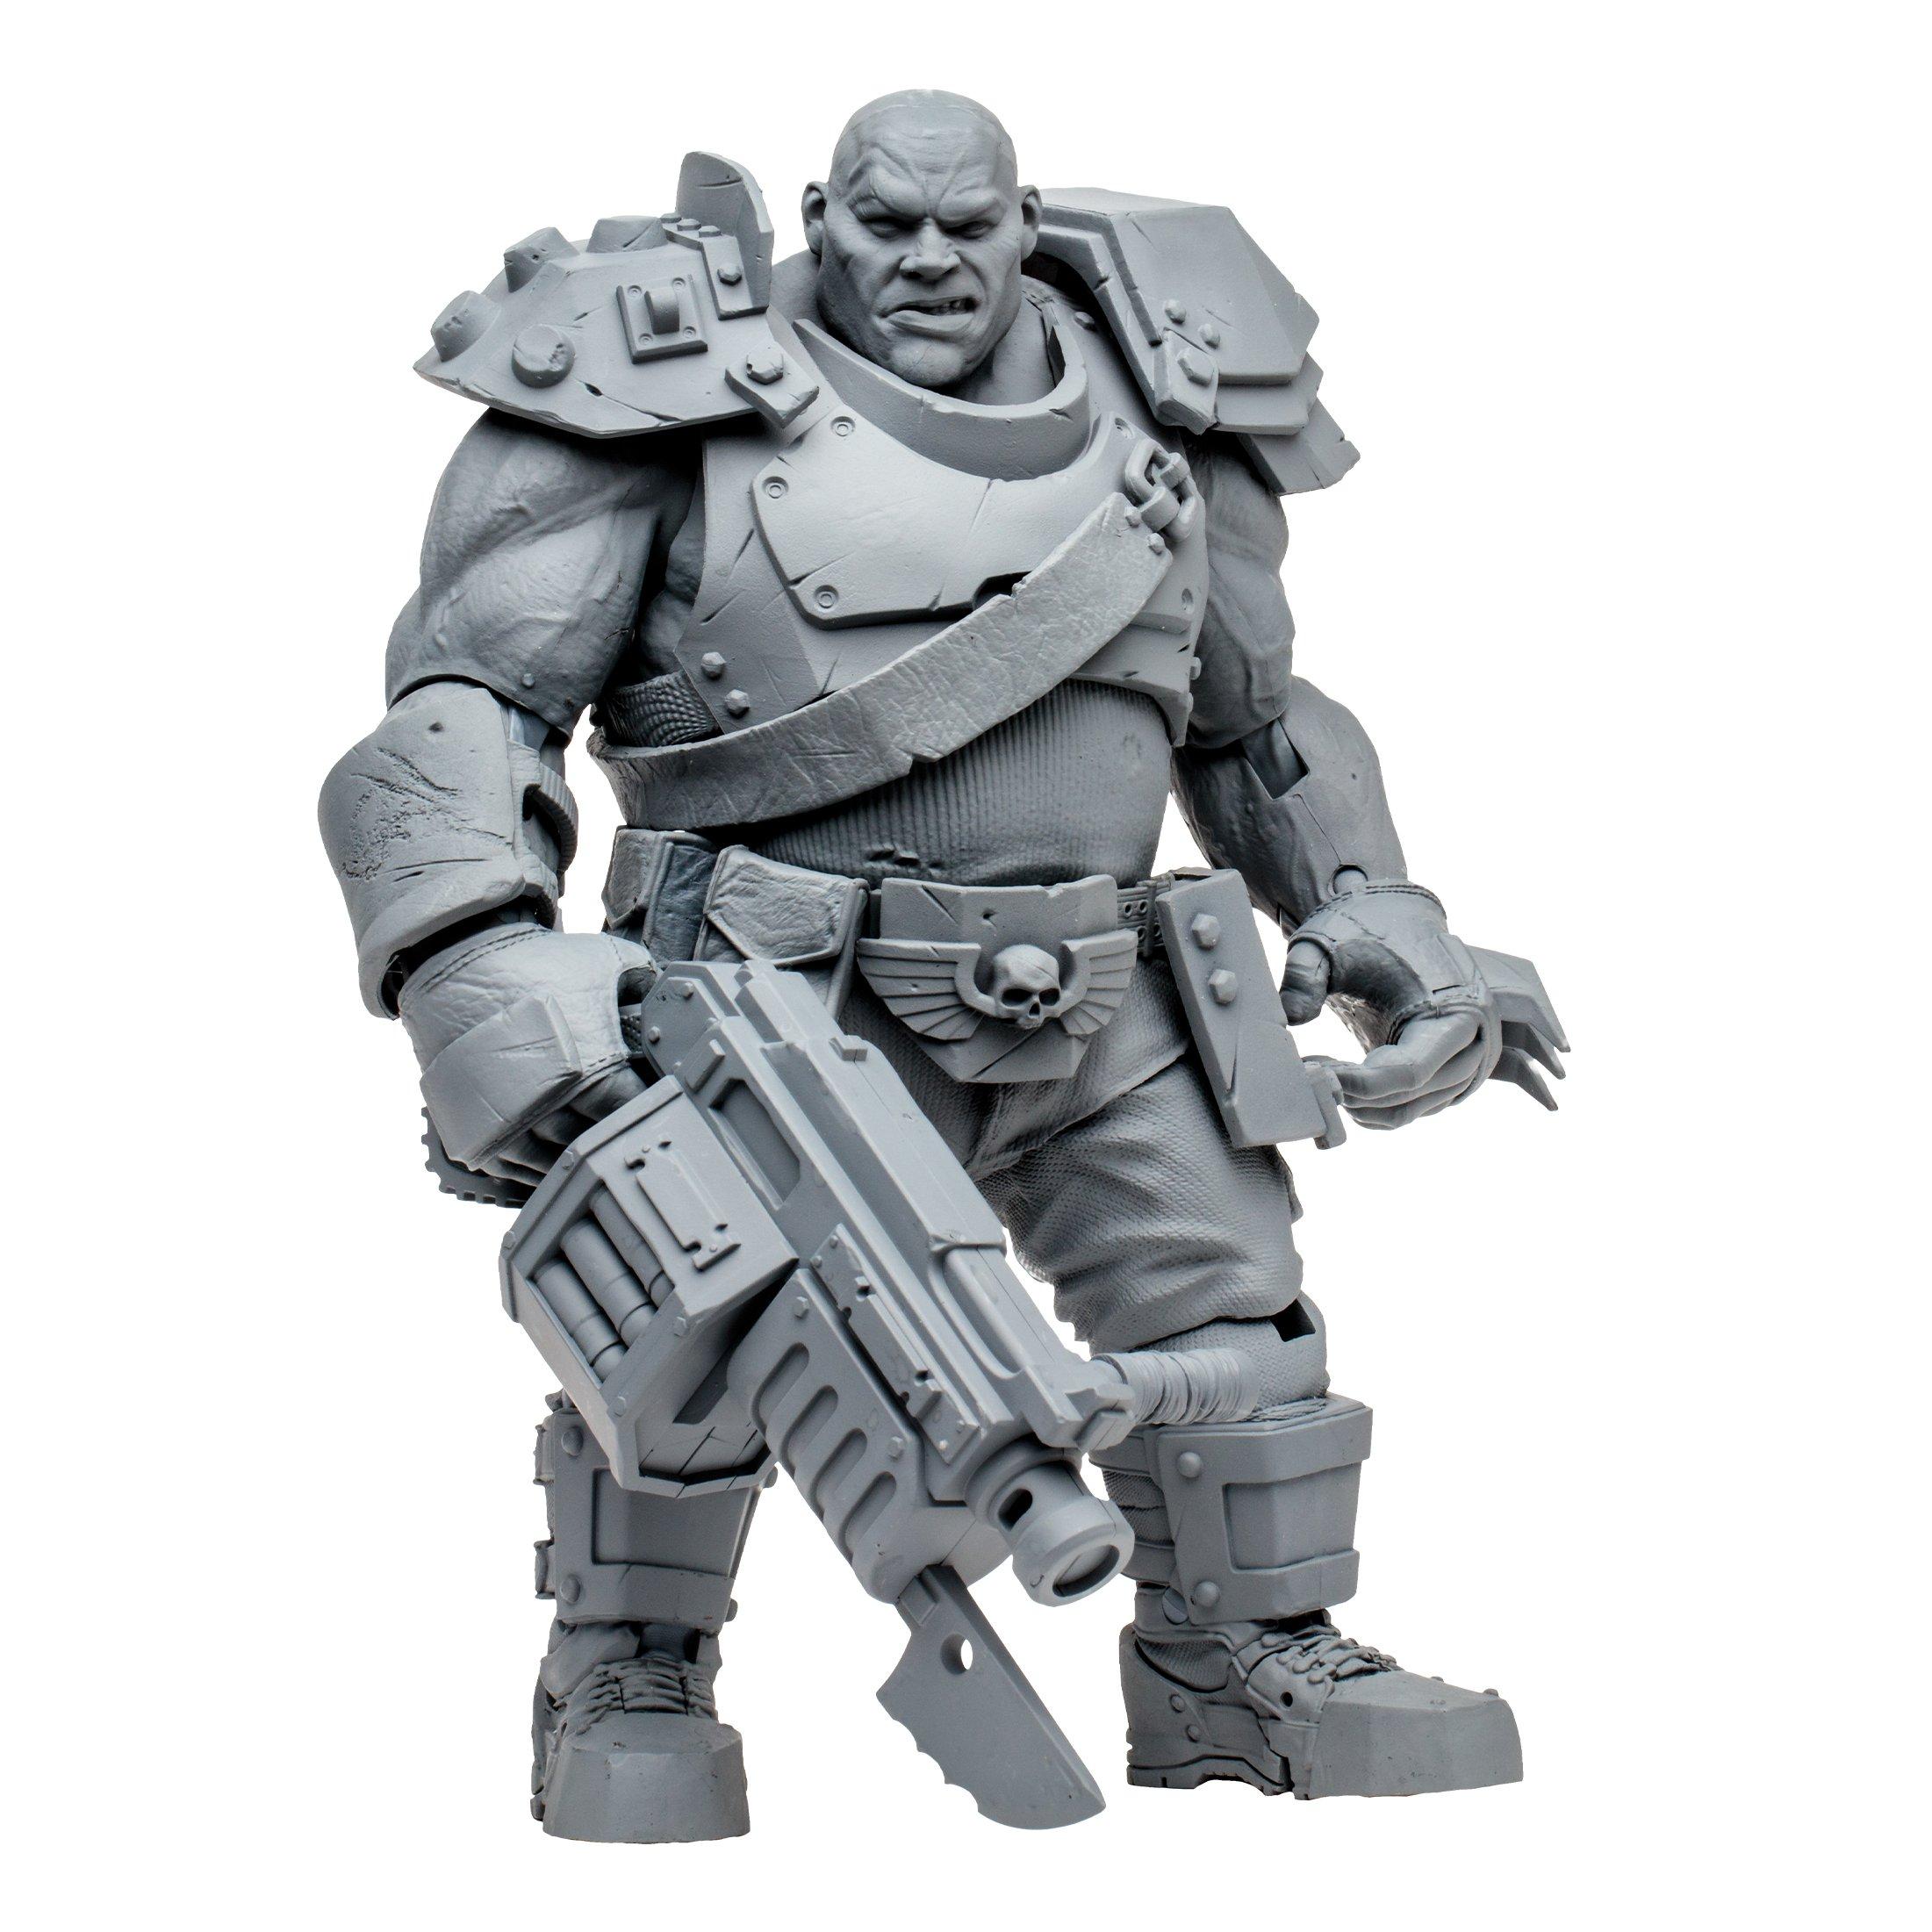 McFarlane Toys Warhammer 40,000 Darktide Ogryn Artist Proof 12-in Megafig Action Figure